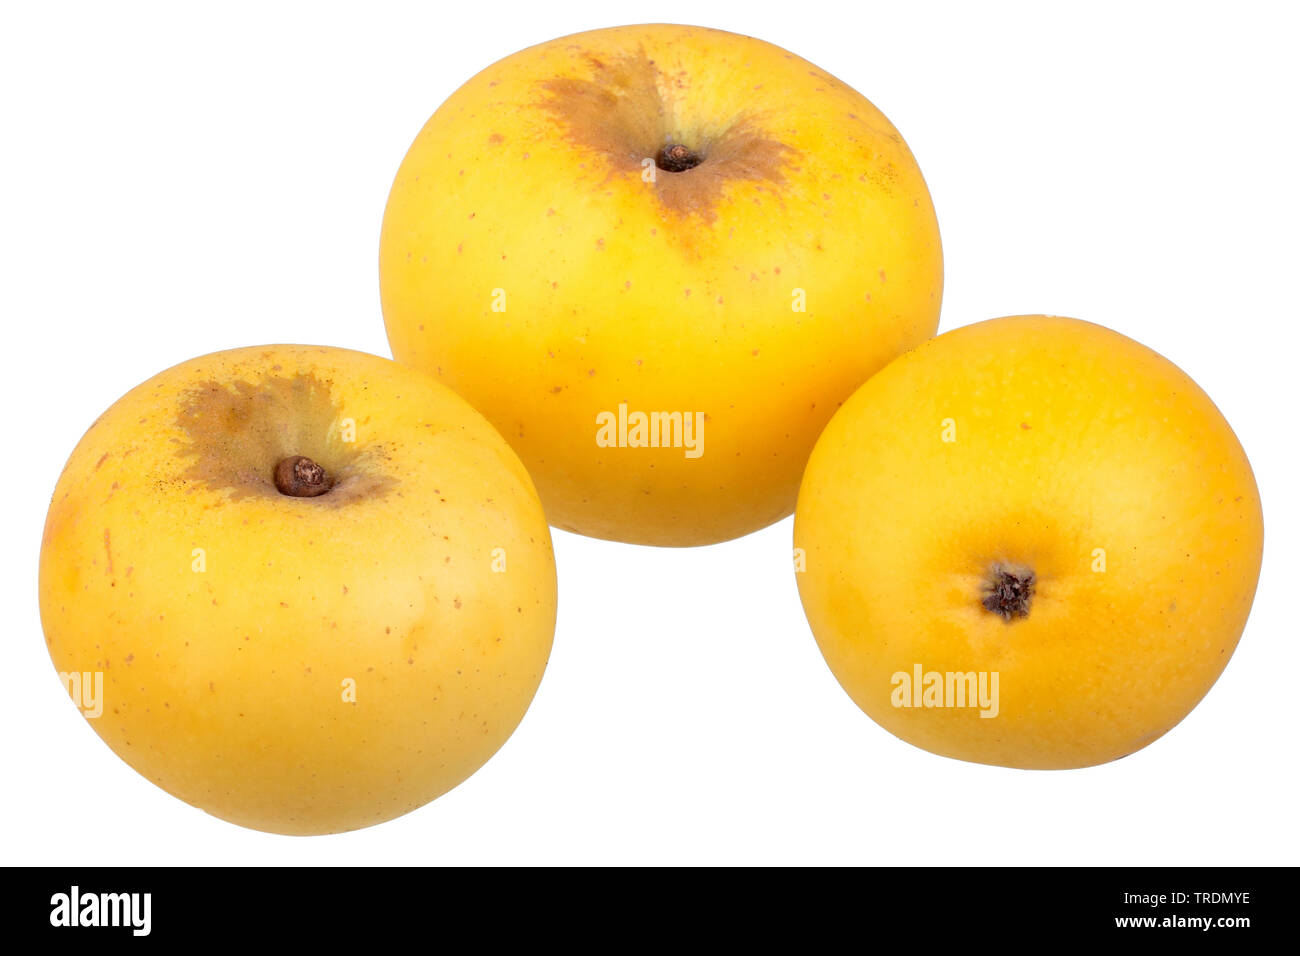 apple (Malus domestica 'Gelber Edelapfel', Malus domestica Gelber Edelapfel), apples of the cultivar Gelber Edelapfel Stock Photo